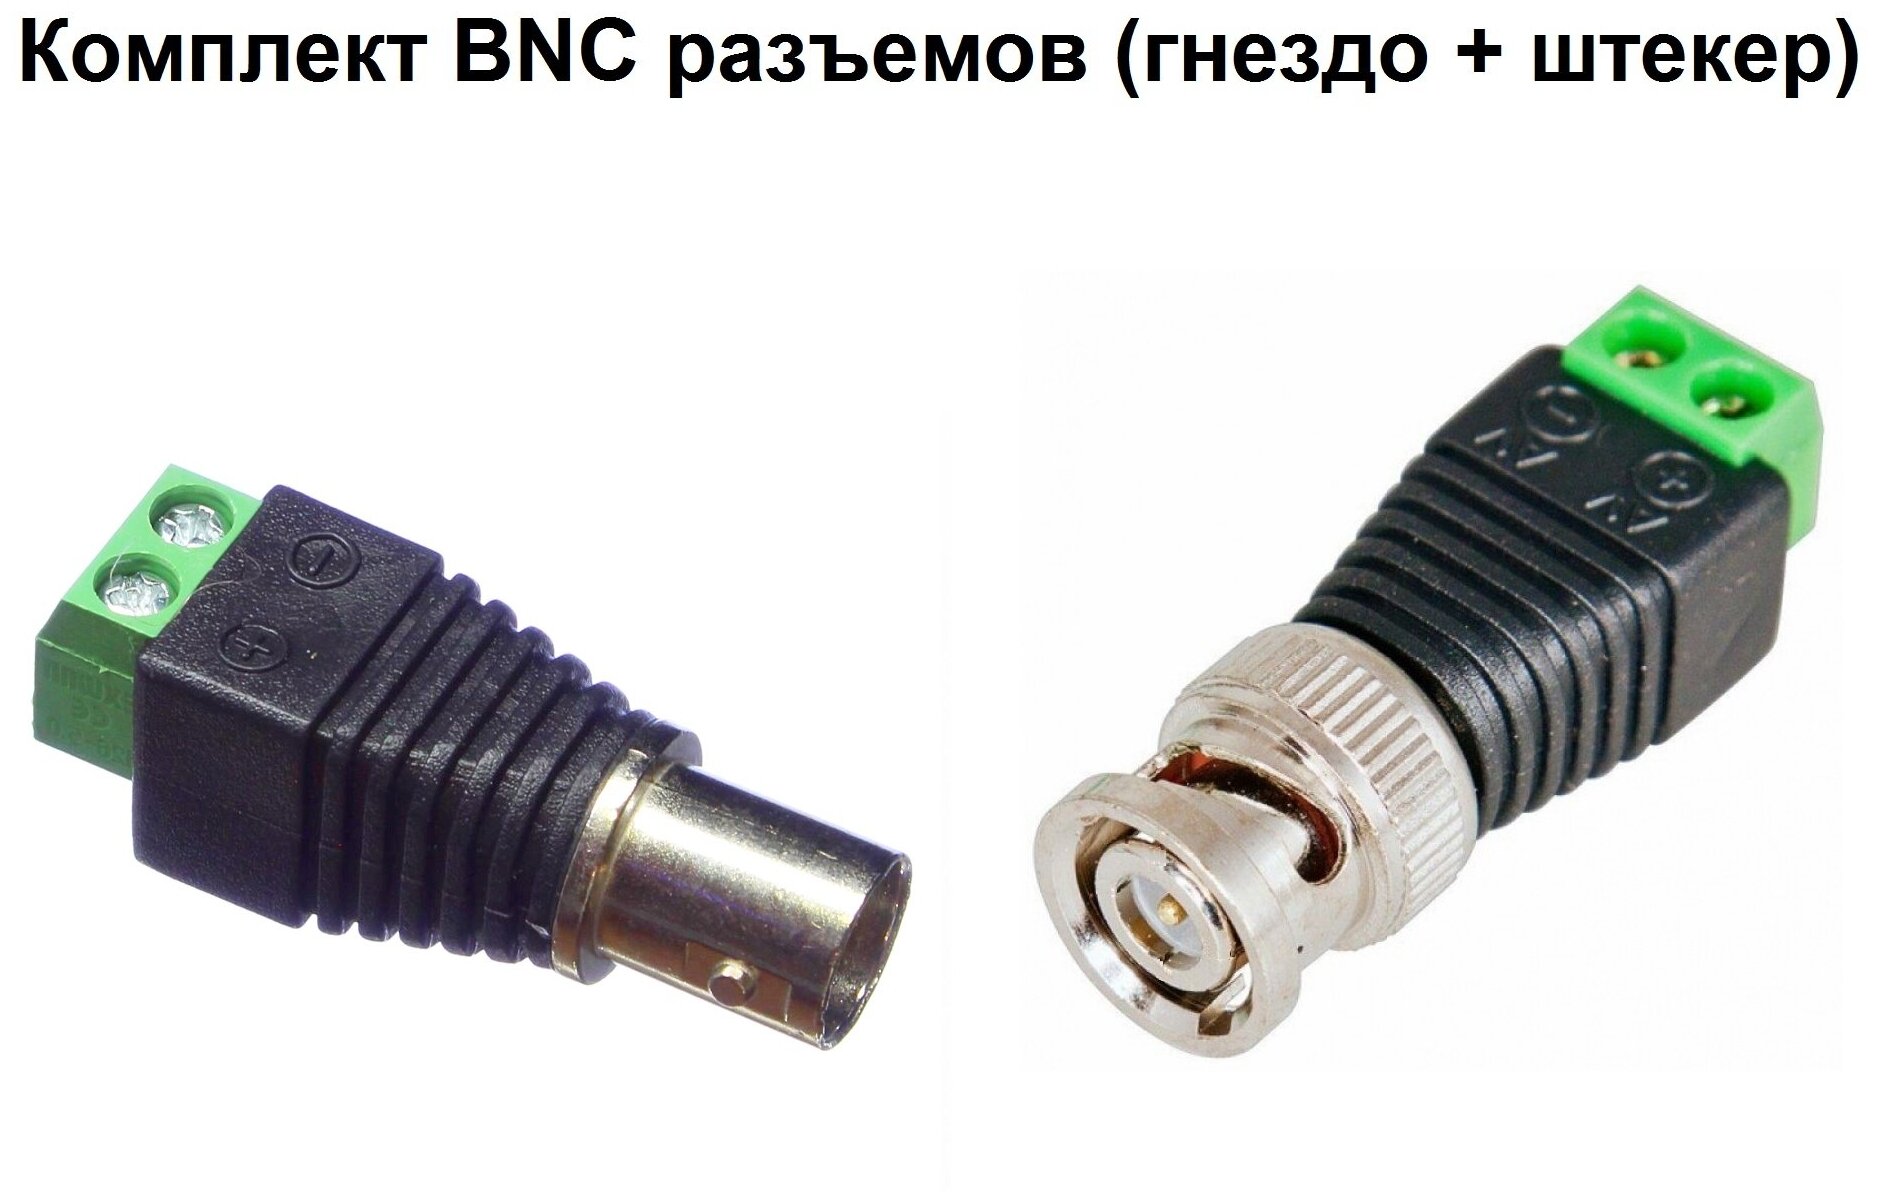 Комплект из 2-х шт разъем BNC штекер + гнездо под 2 винта на кабель